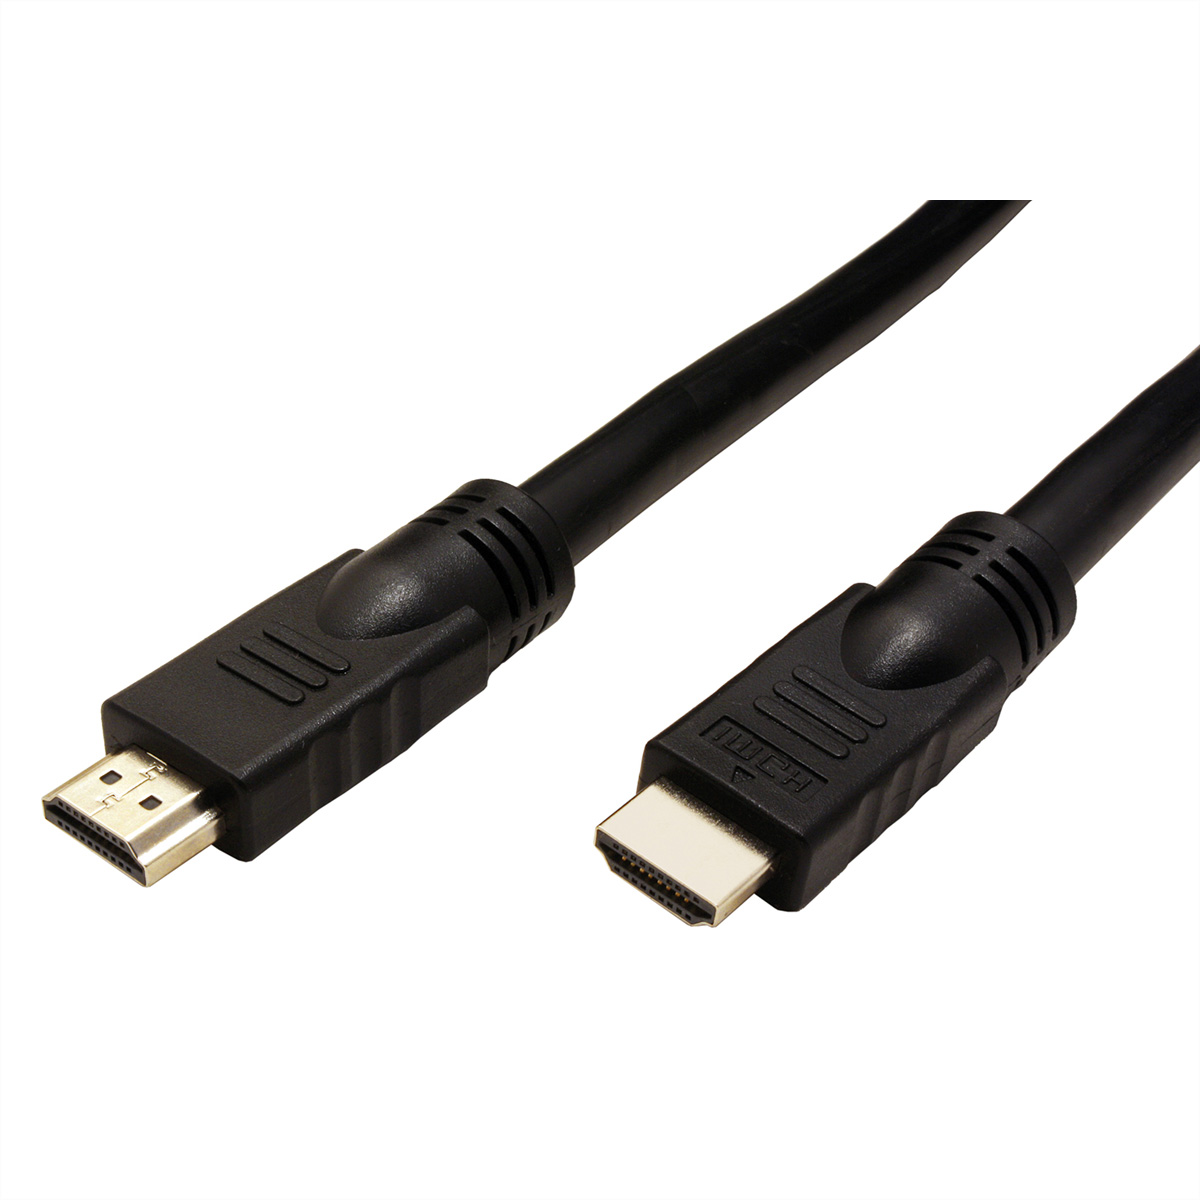 Ultra Kabel, HDMI UHD Kabel mit mit HD ROLINE Ethernet HDMI 4K Repeater